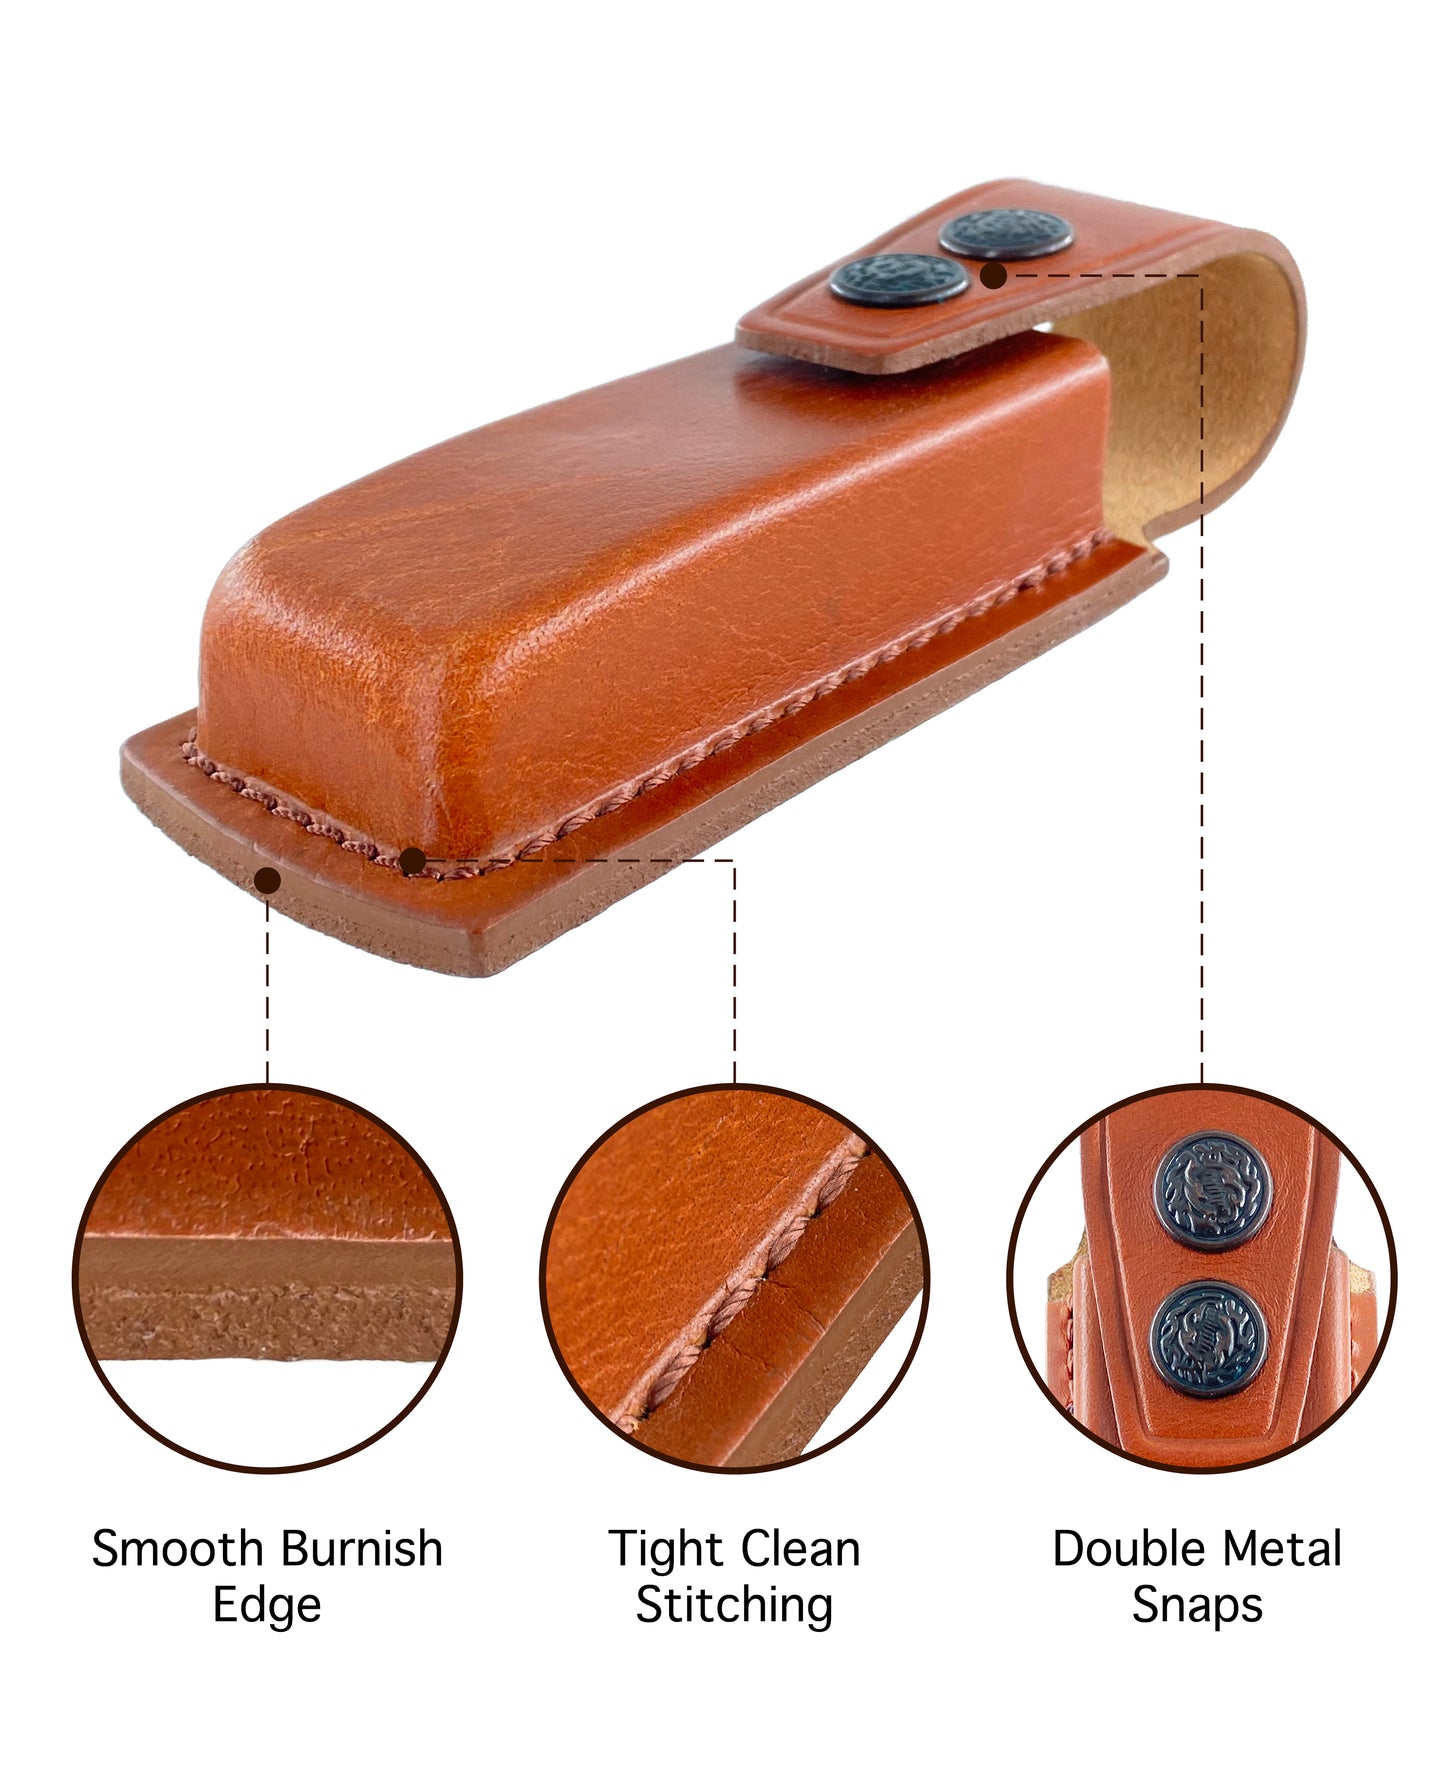 Beretta 92 Magazine Pouch/Carrier/Case Handmade Leather Single Magazine Holder (Alis005)